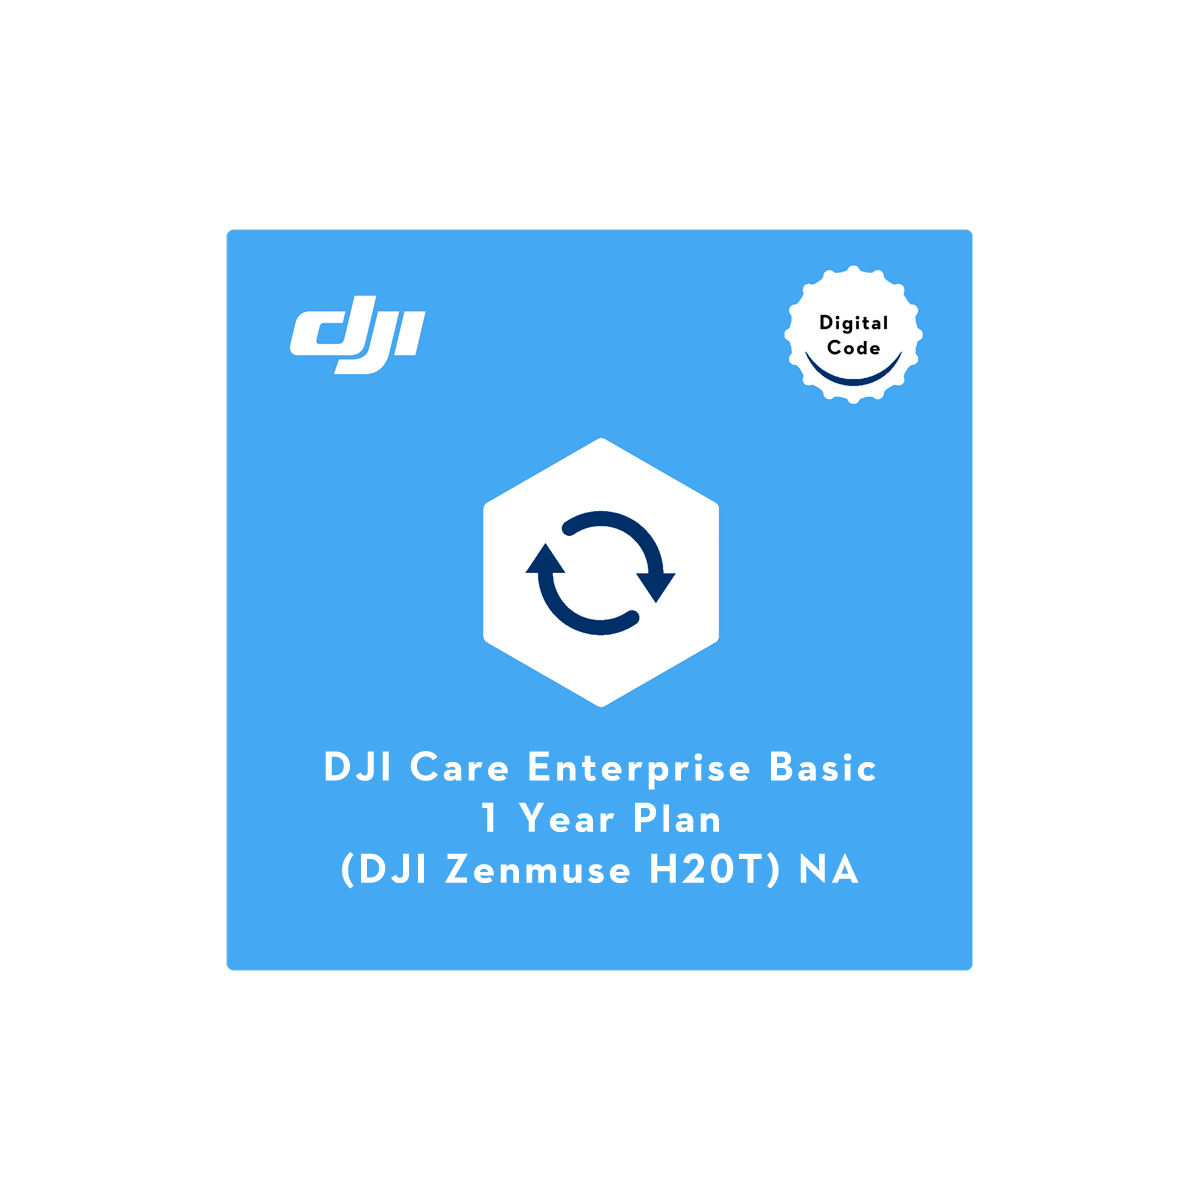 DJI Care Enterprise Basic (Zenmuse H20T) NA